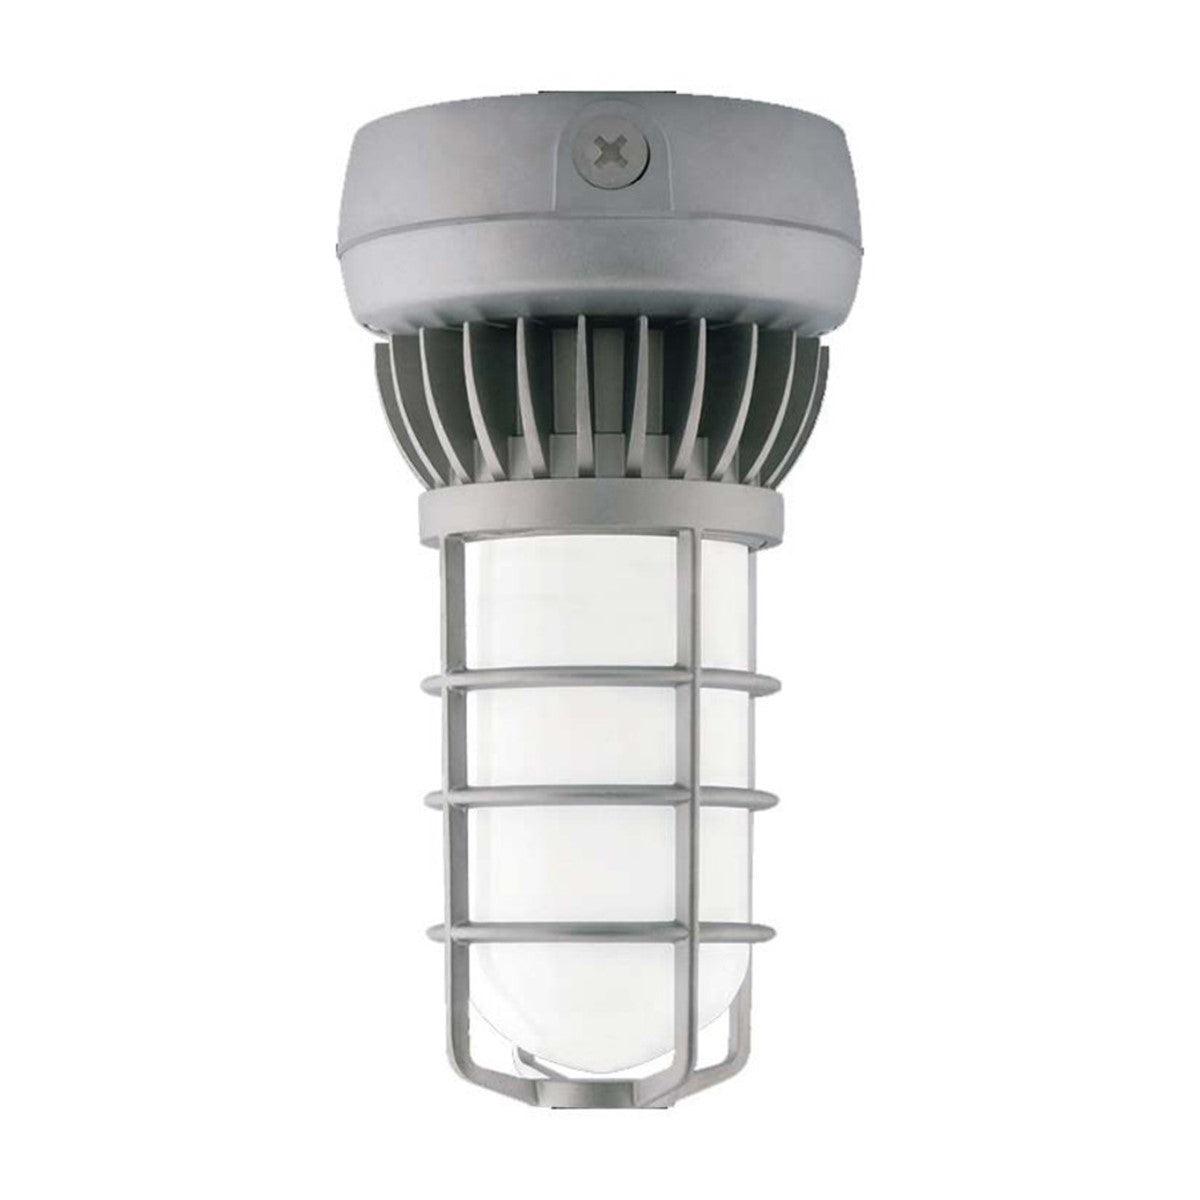 LED Jelly Jar Light Fixture 13 Watts 730 Lumens 5000K 120-277V - Bees Lighting